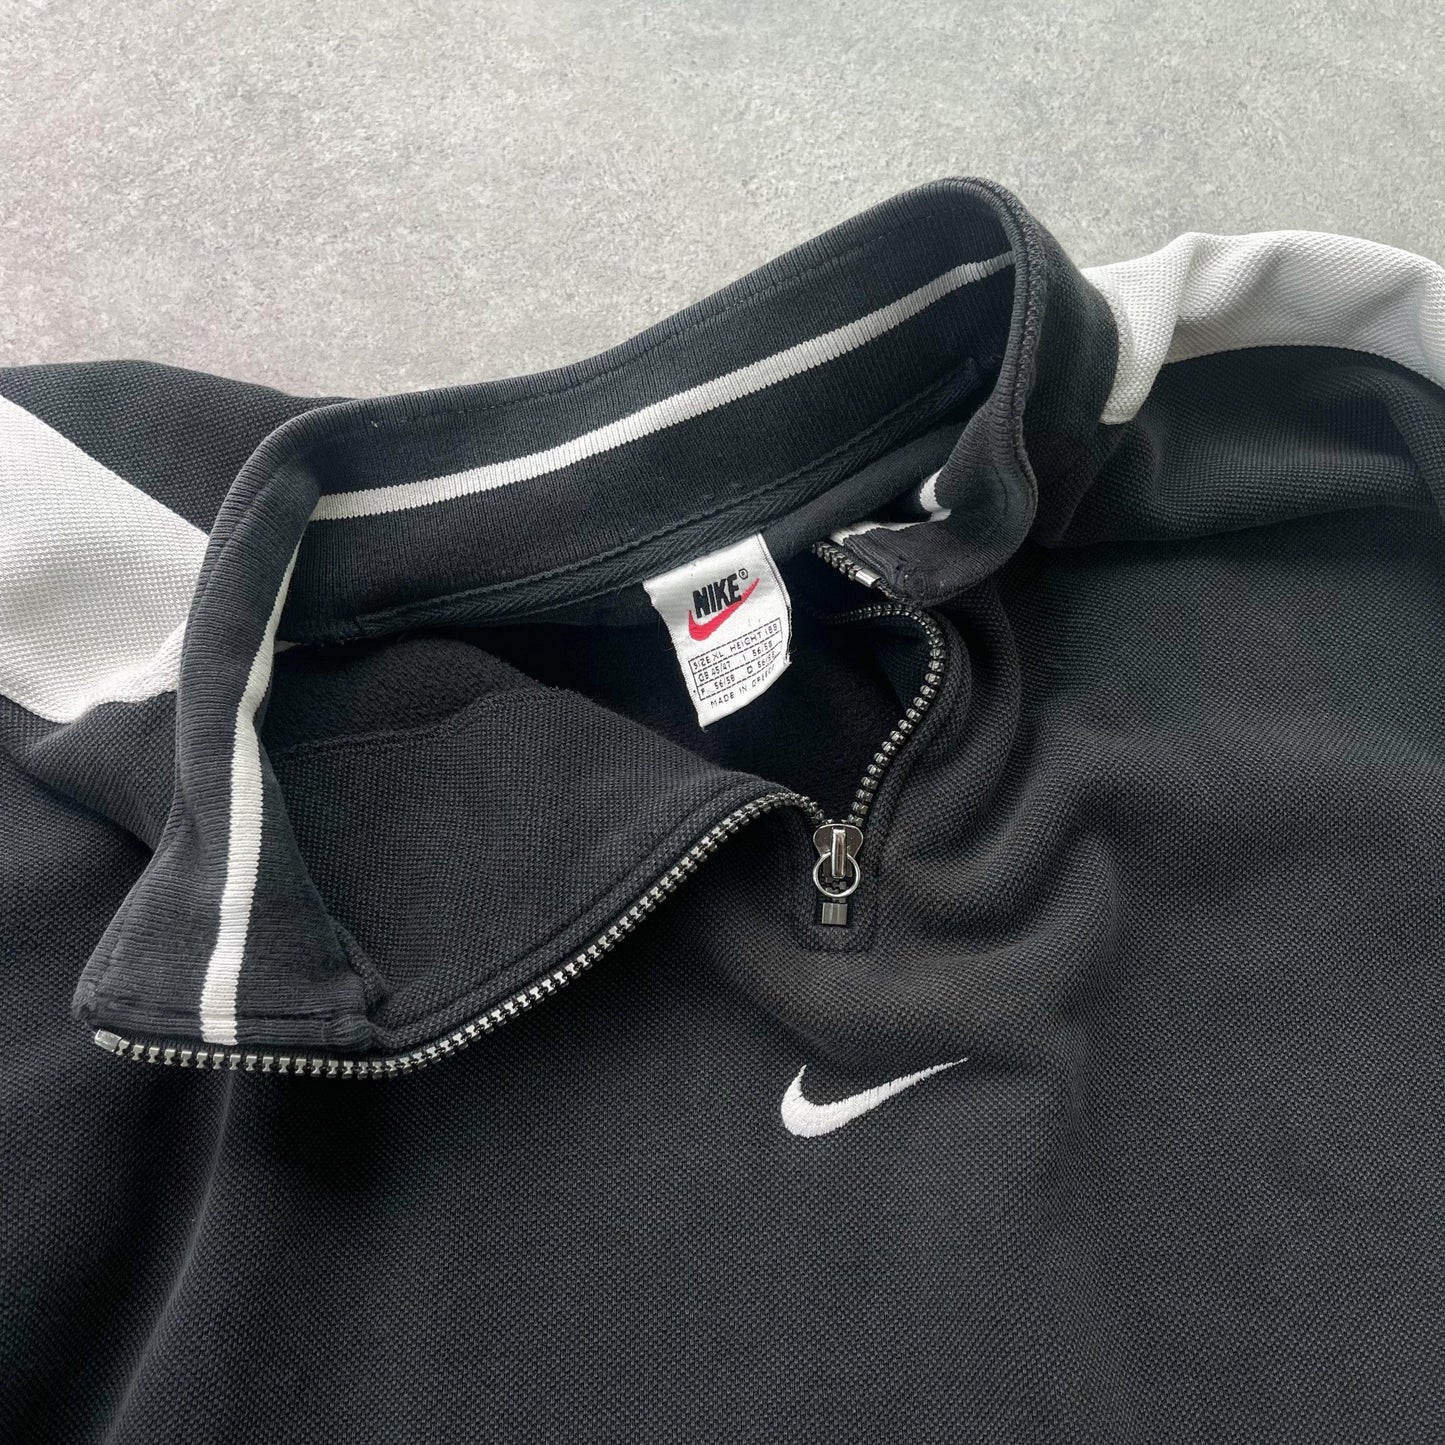 Nike RARE 1990s 1/4 zip heavyweight embroidered sweatshirt (XL) - Known Source